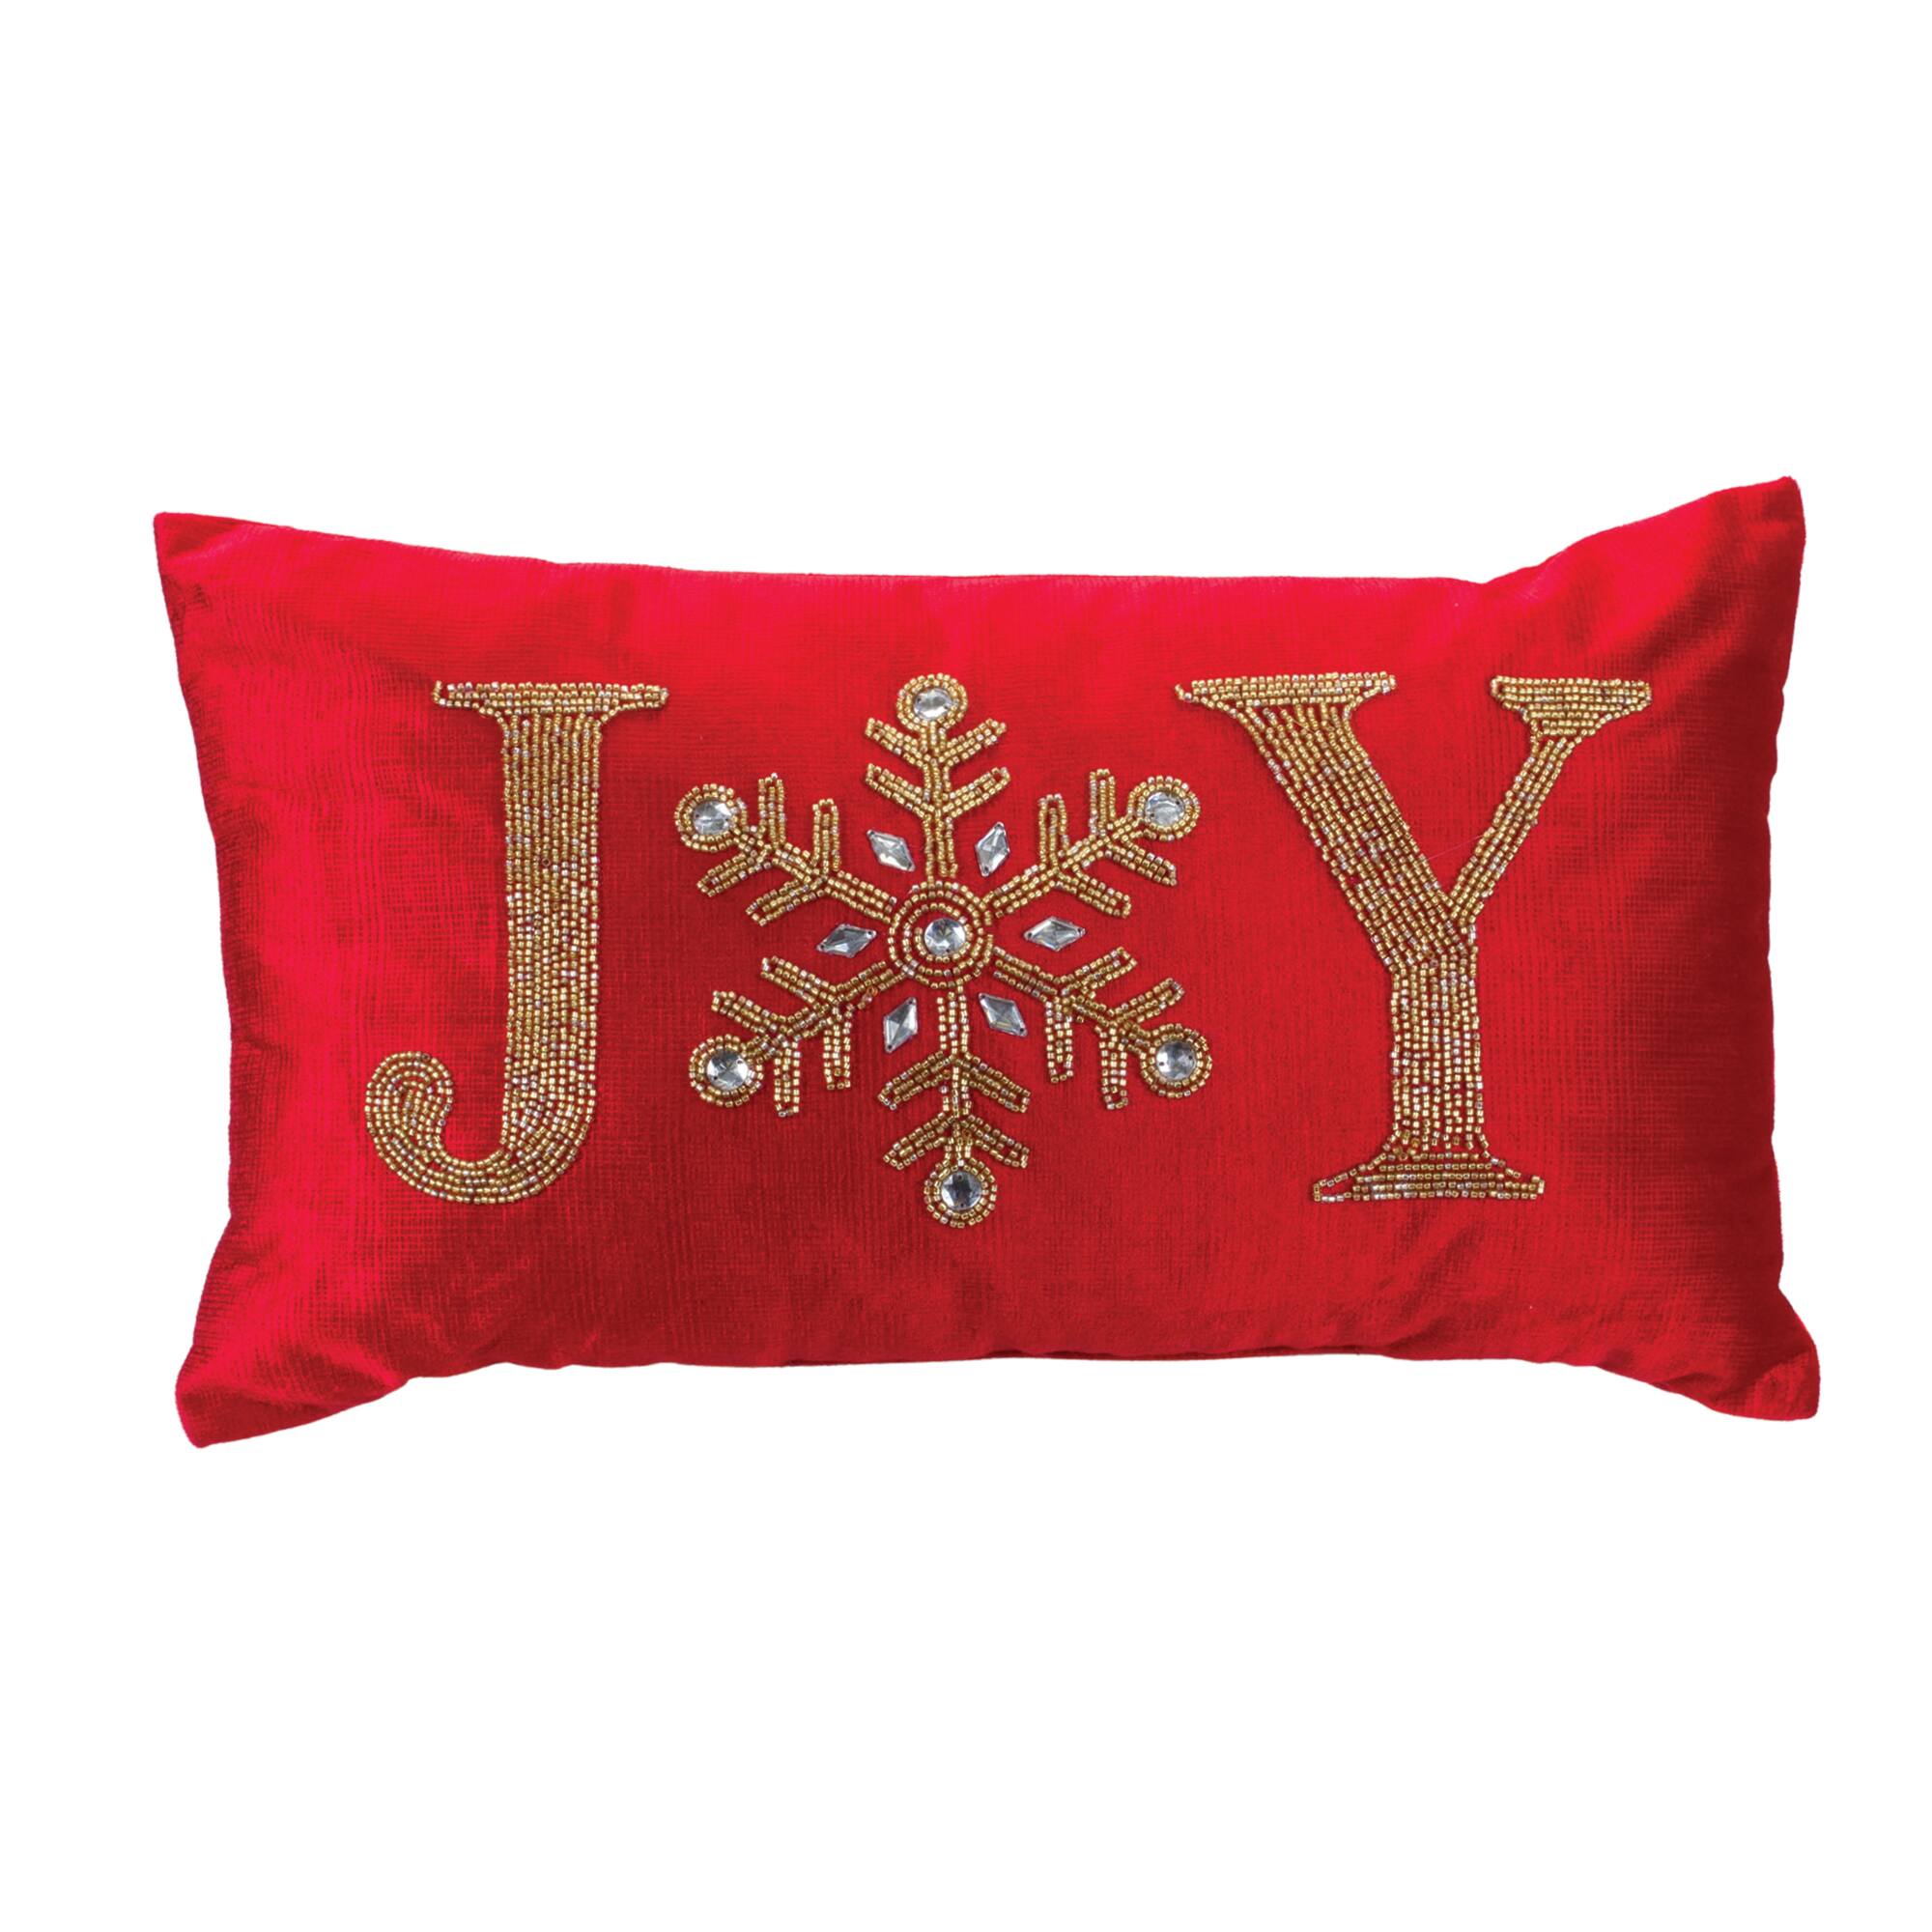 Red Beaded Joy &#x26; Noel Holiday Pillow Set